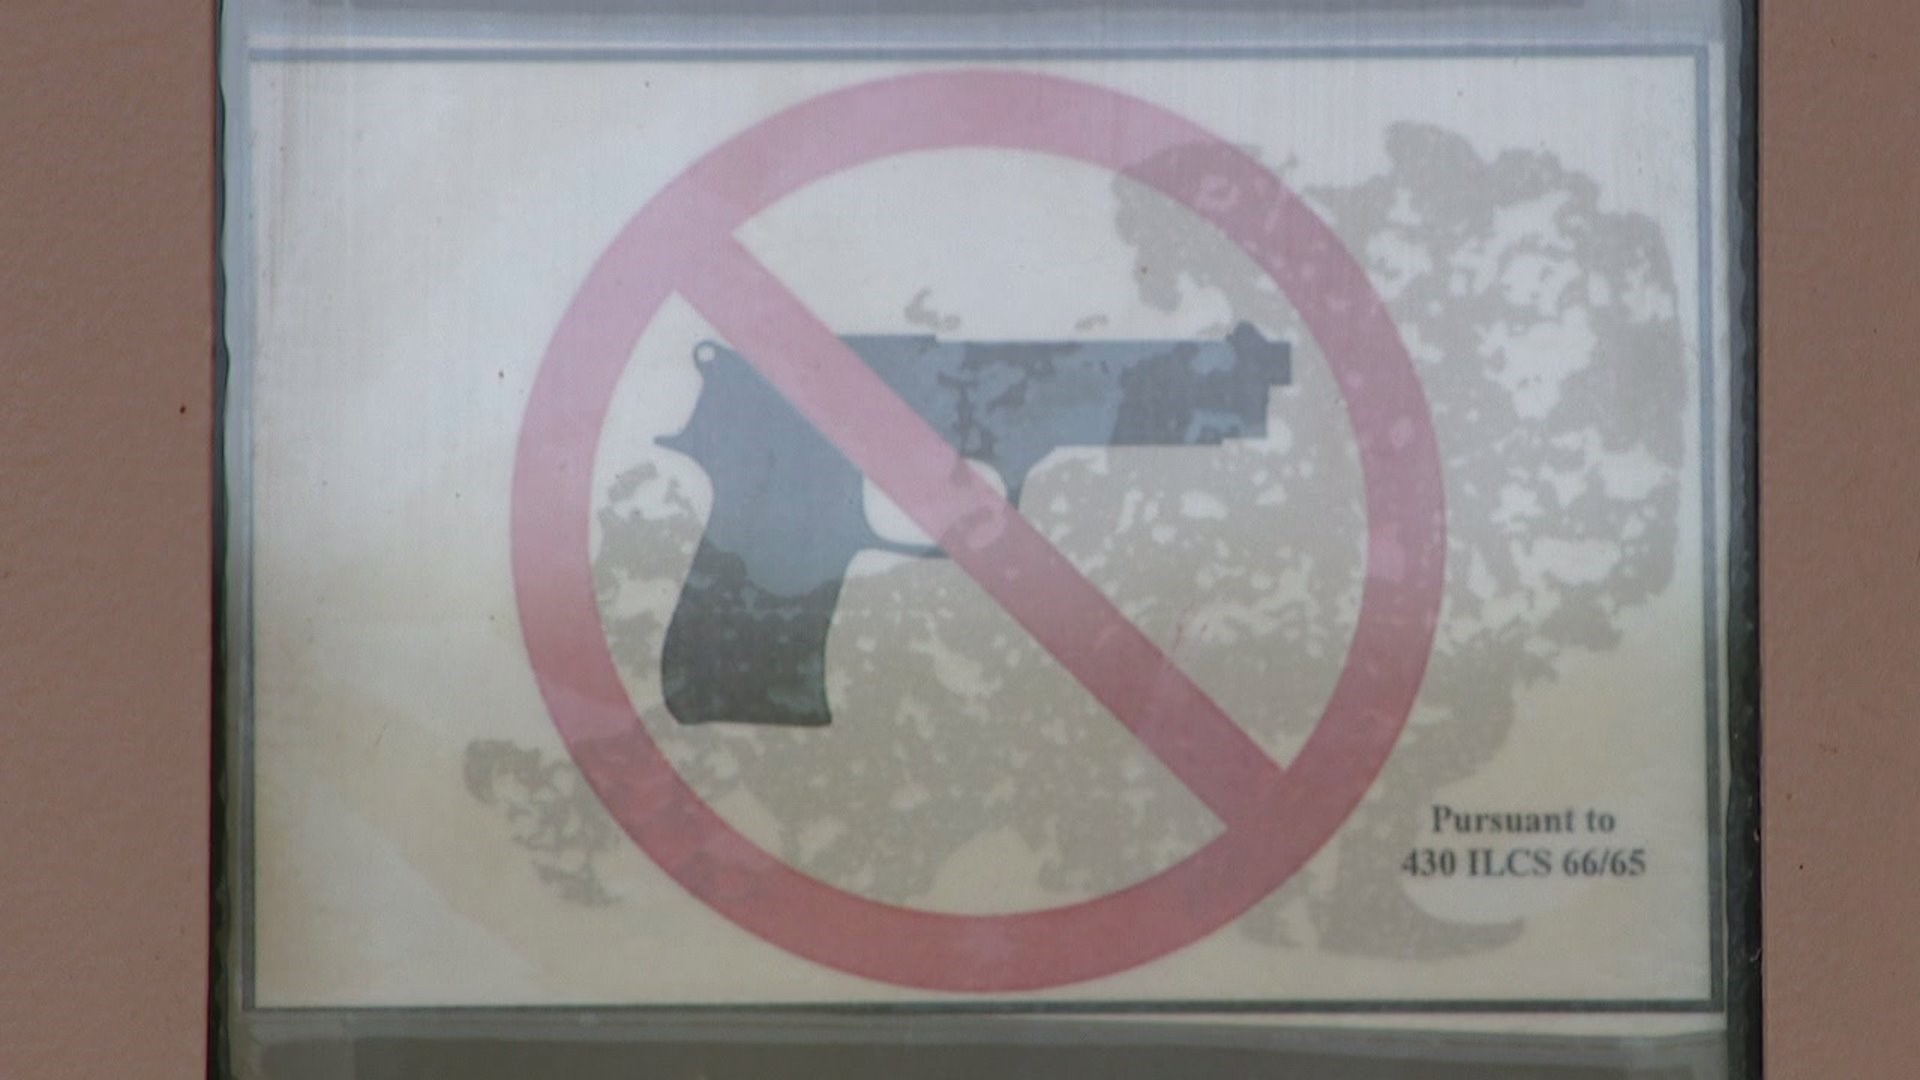 Teachers apprehensive about carrying guns in school